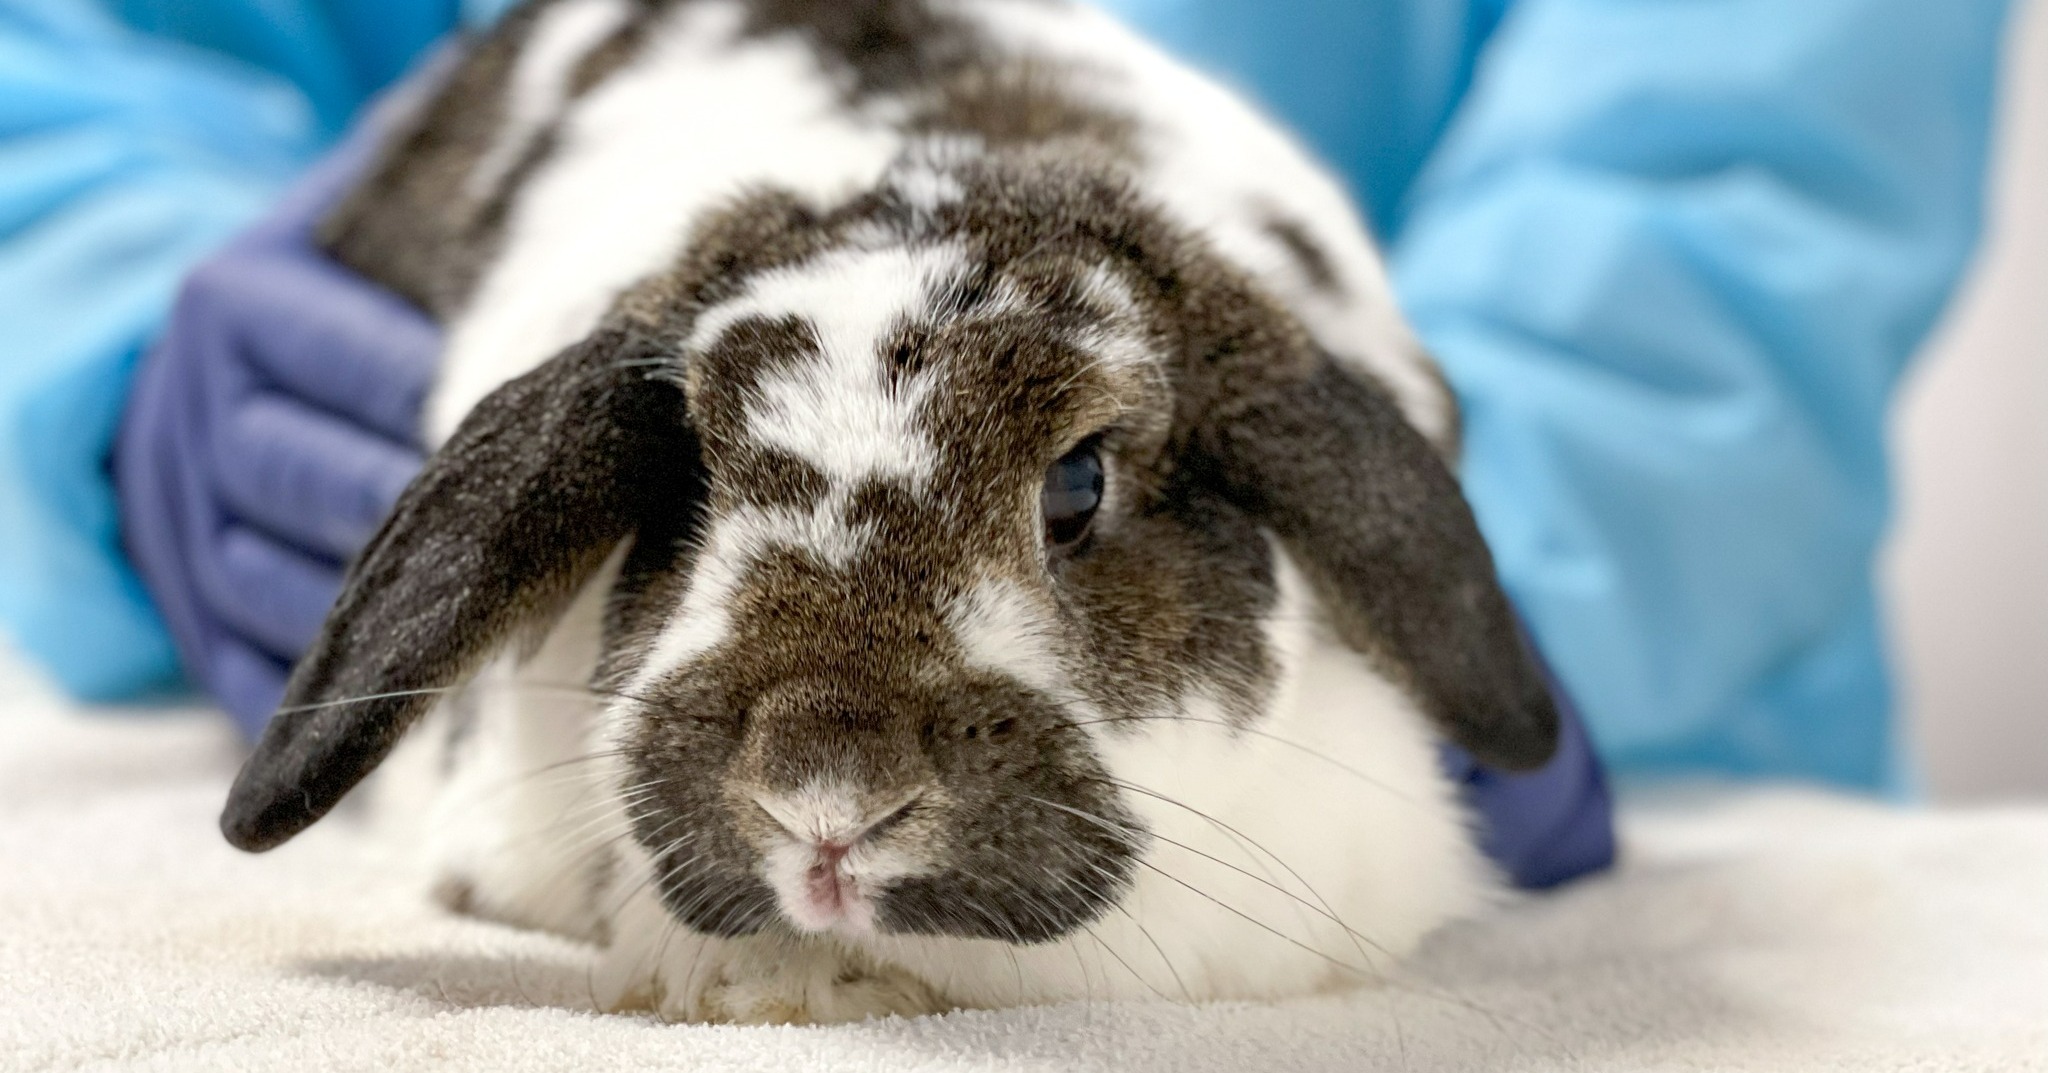 Bunny in veterinary care at Pieper Veterinary 